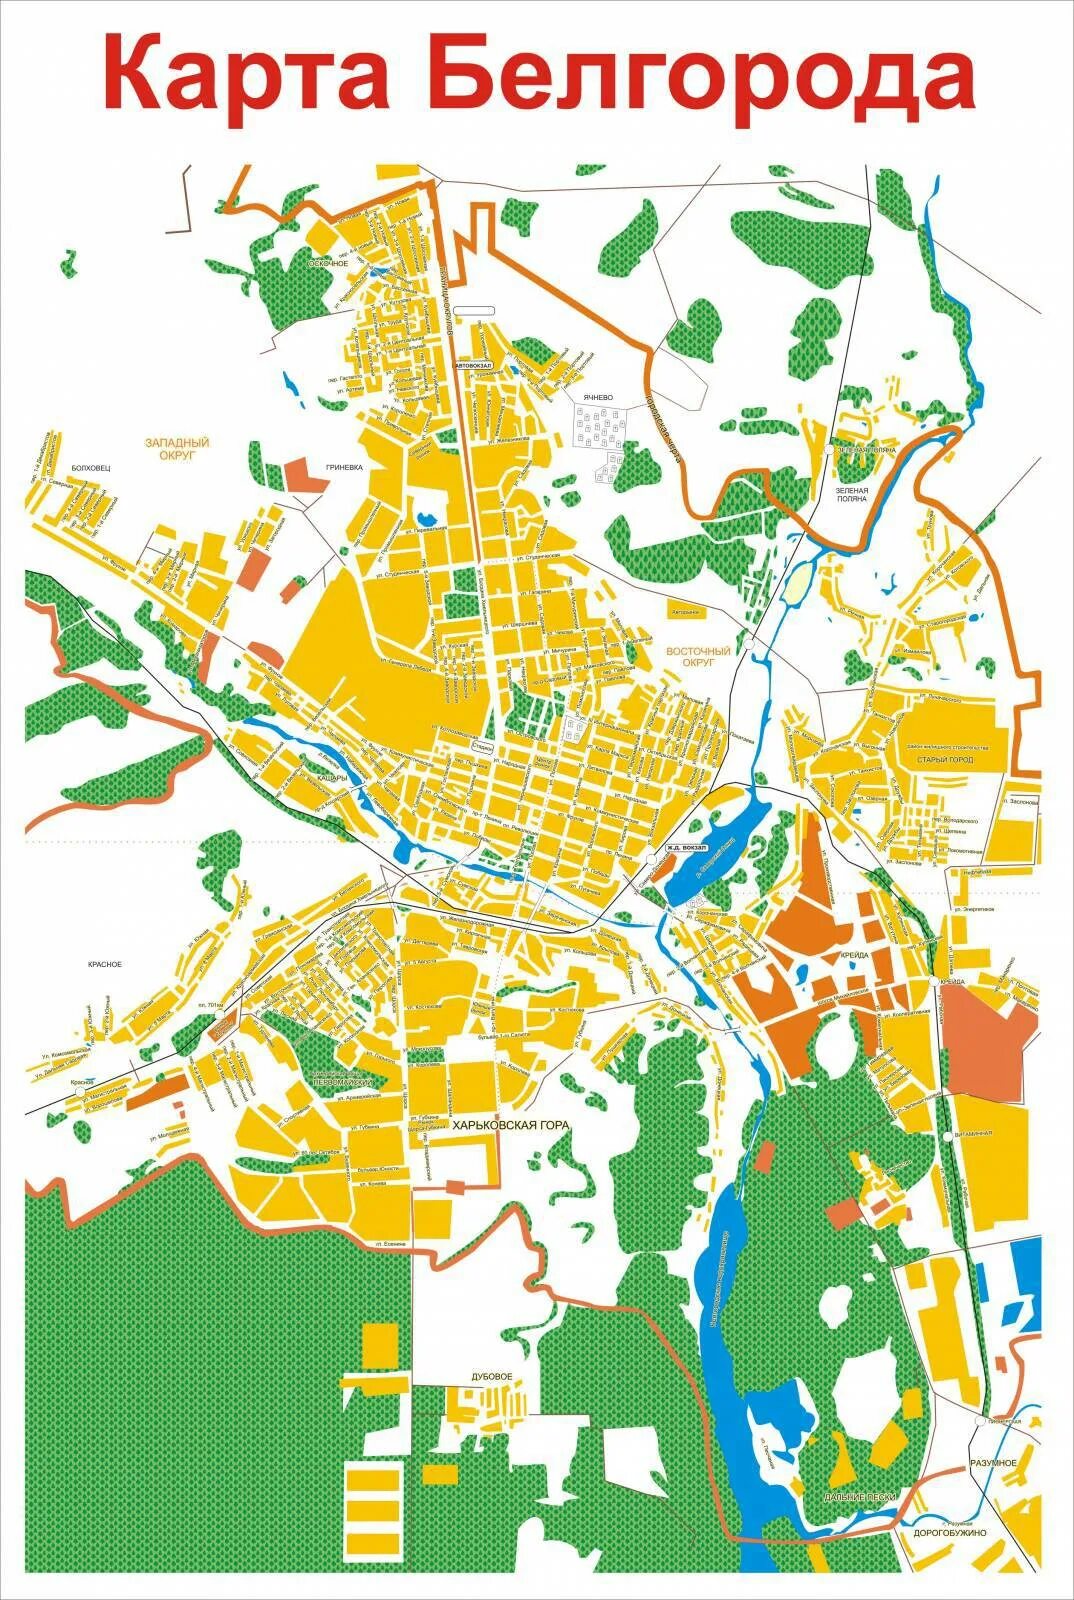 Г Белгород на карте. Карта Белгорода с улицами. Карта города. Белгород. Карта Белгорода с улицами и районами.